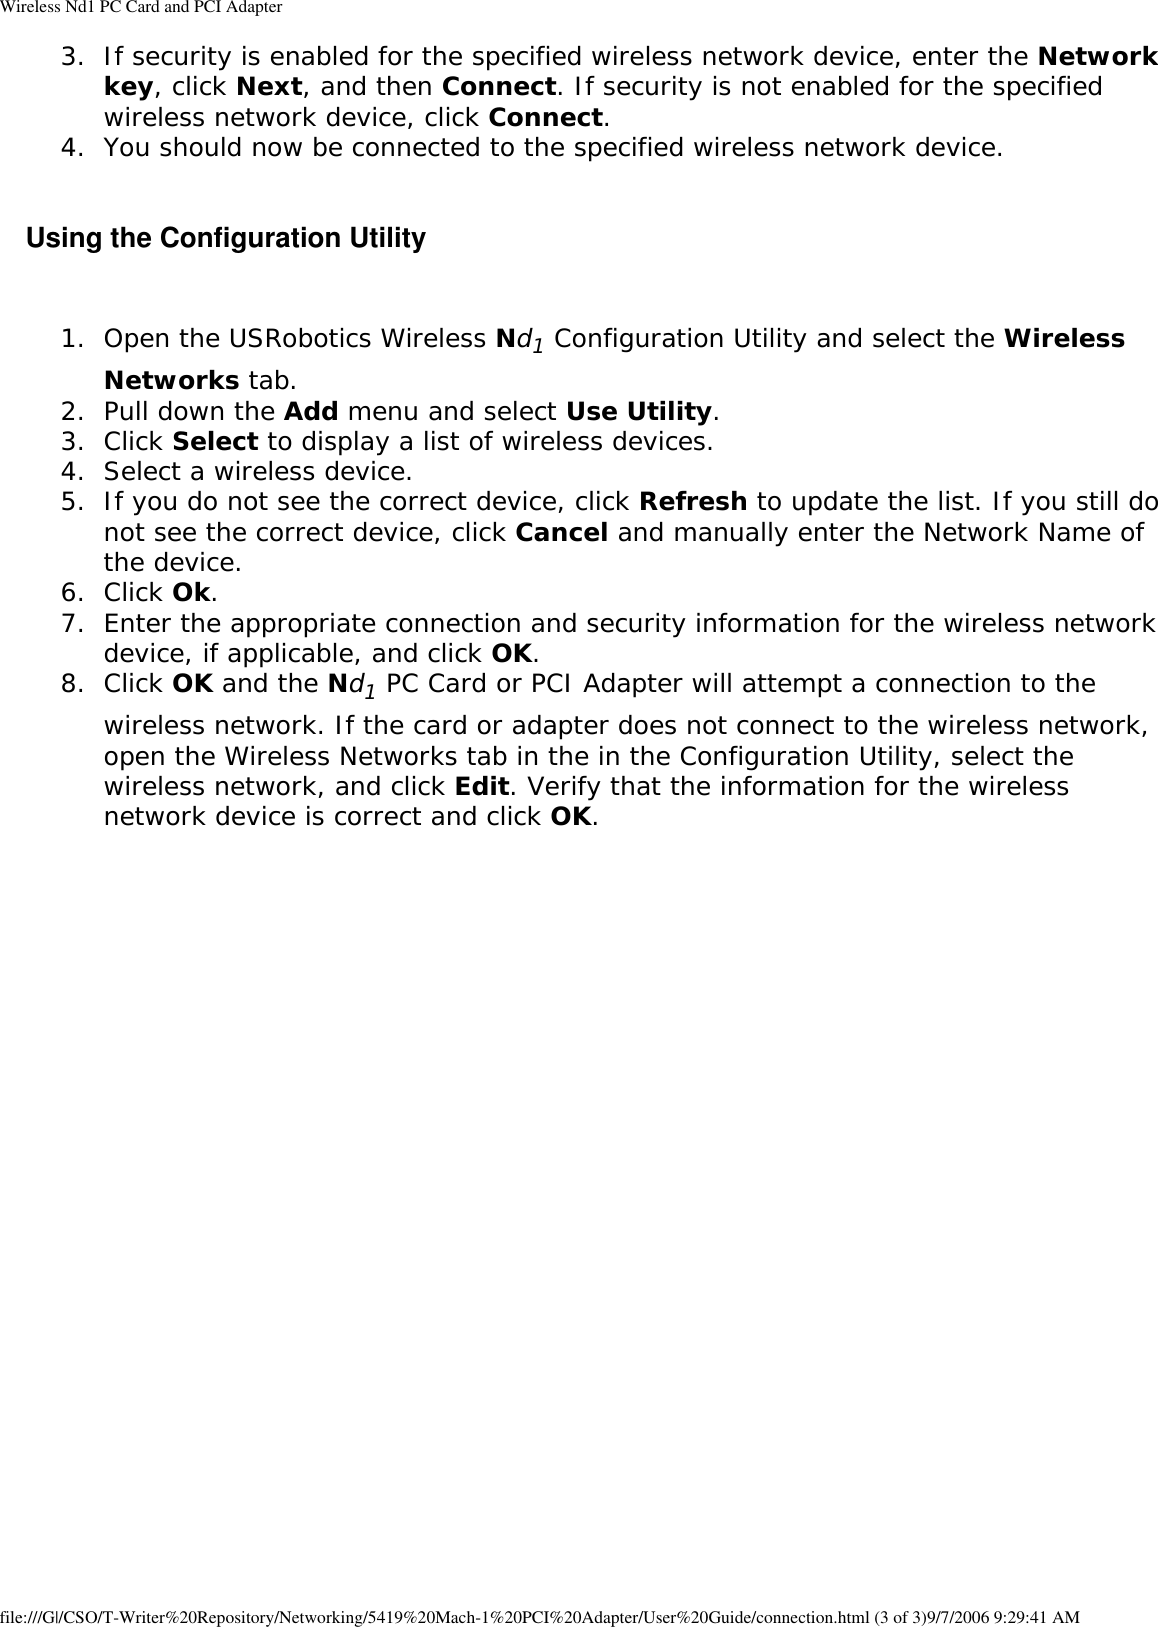 Page 26 of GemTek Technology C950622G Wireless Nd1 PC Card User Manual Wireless Nd1 PC Card and PCI Adapter